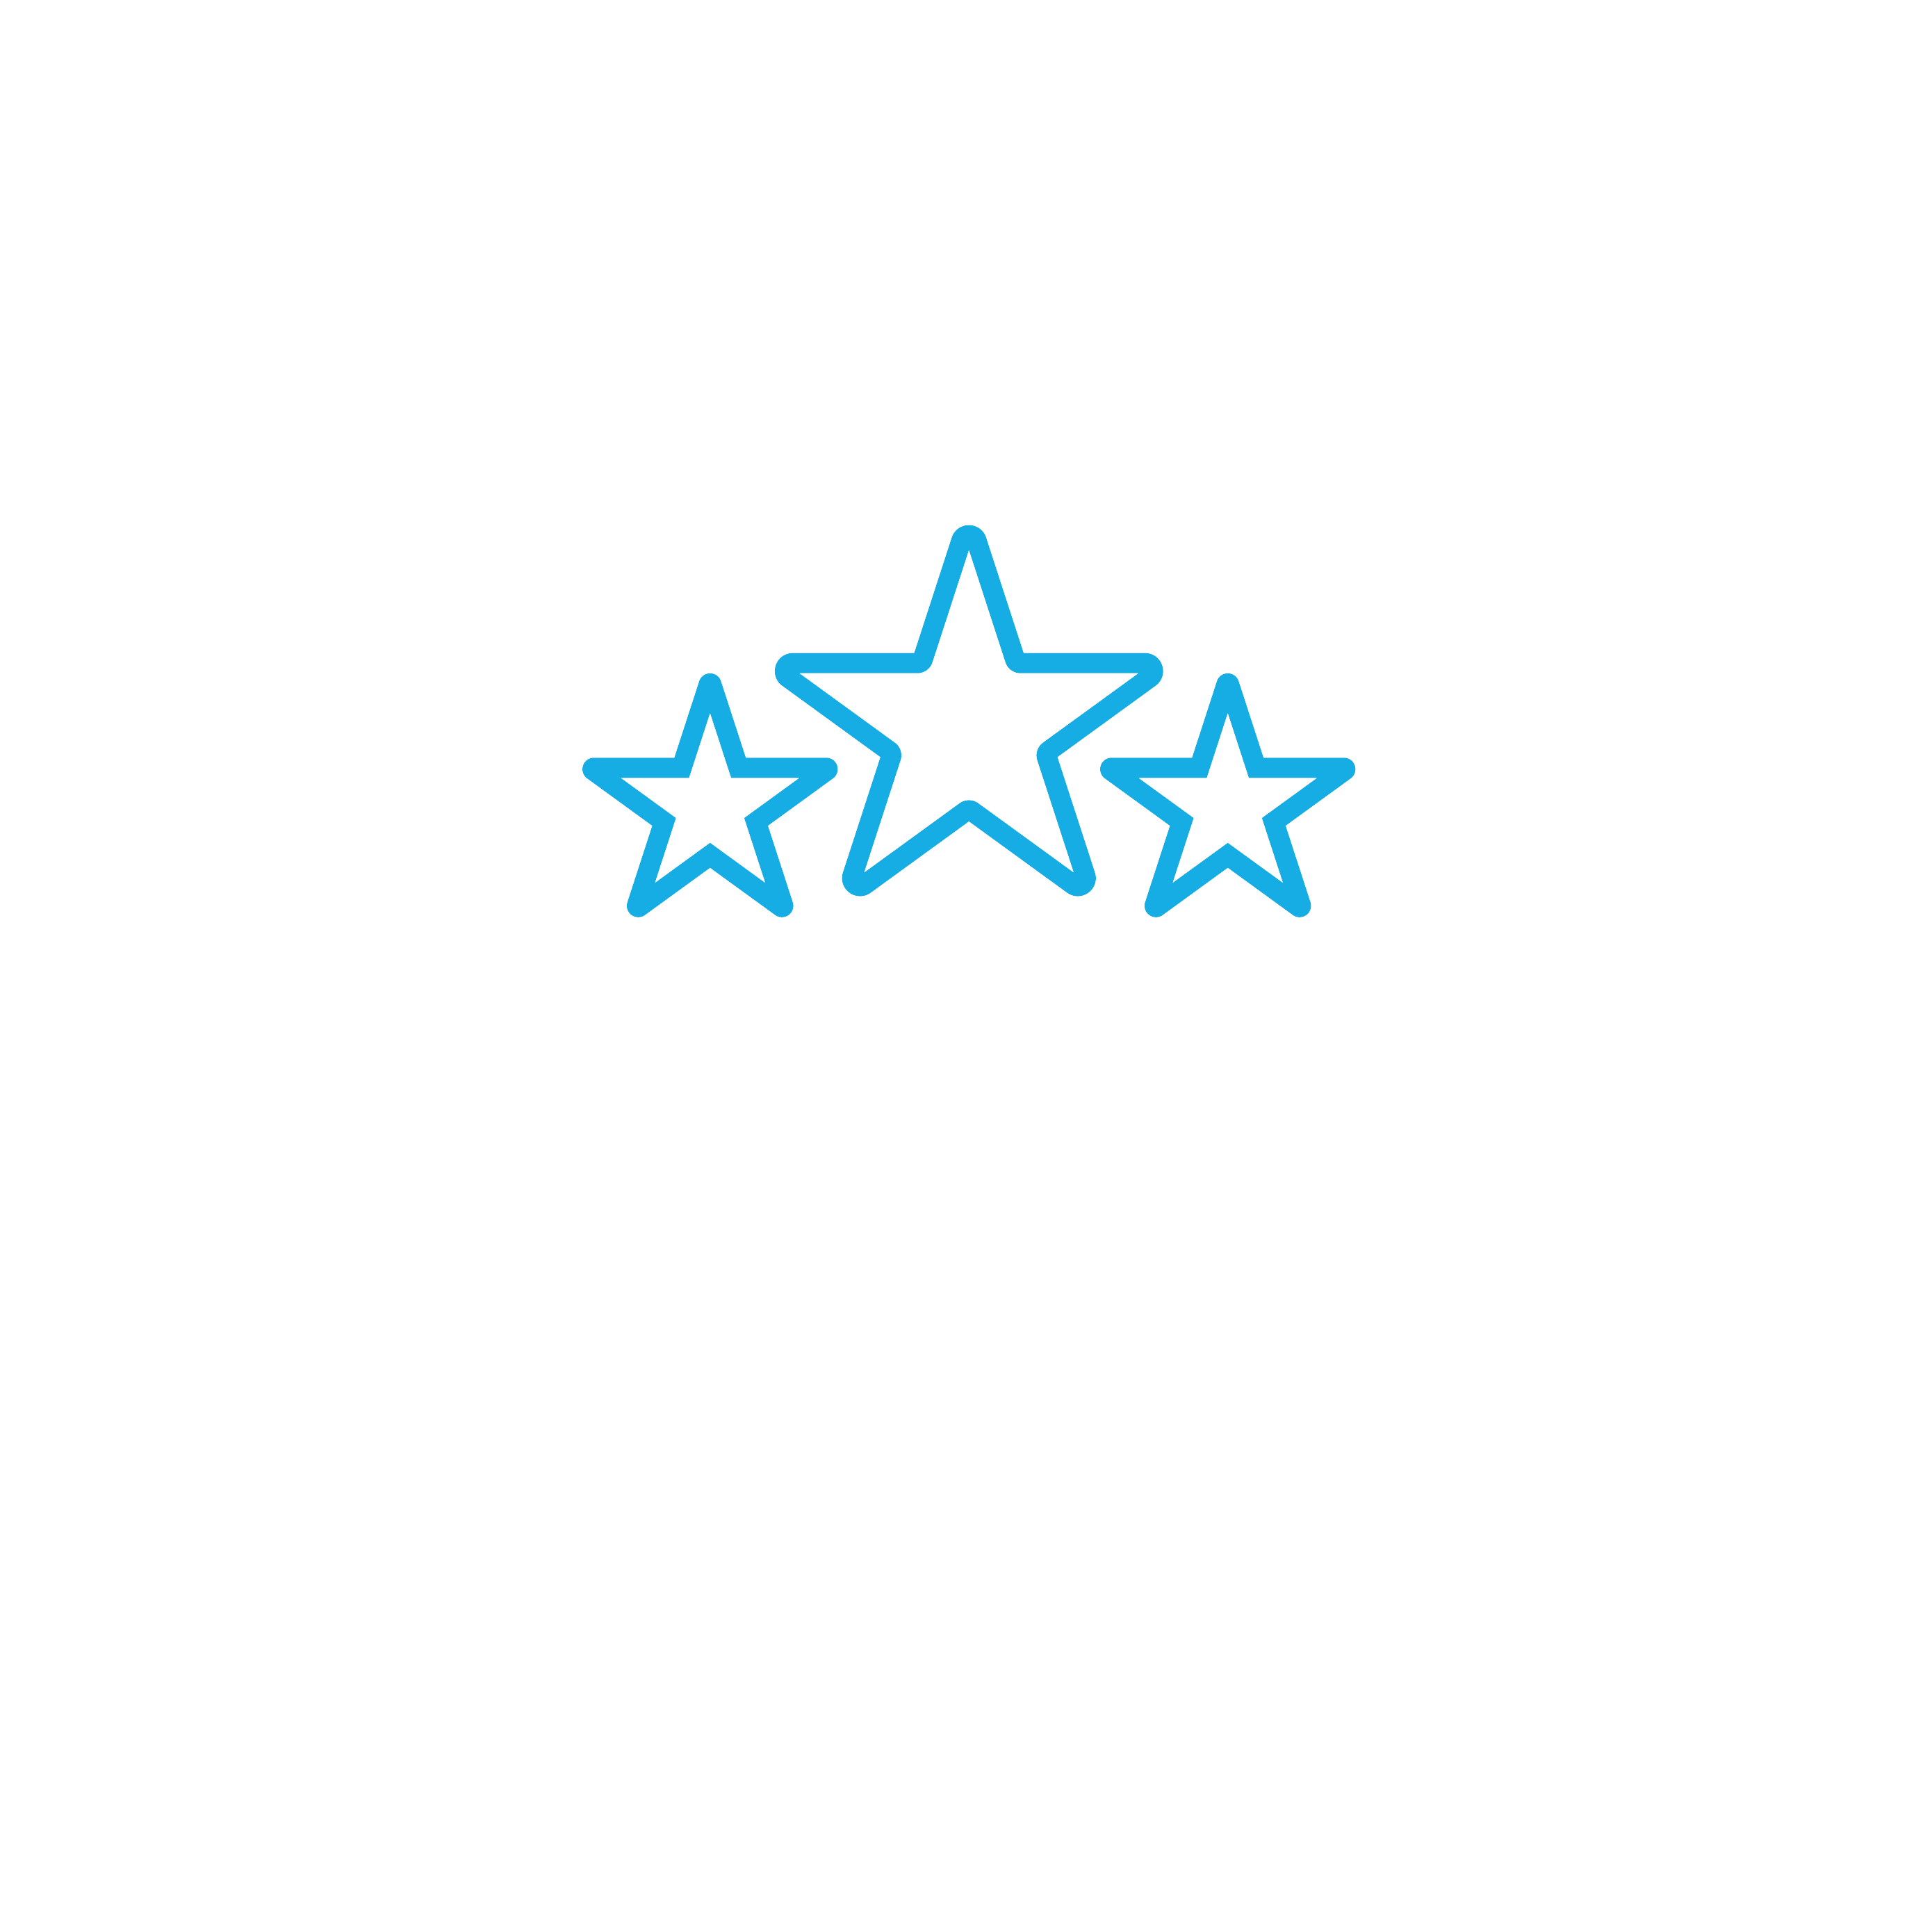 Top Product Award Winner